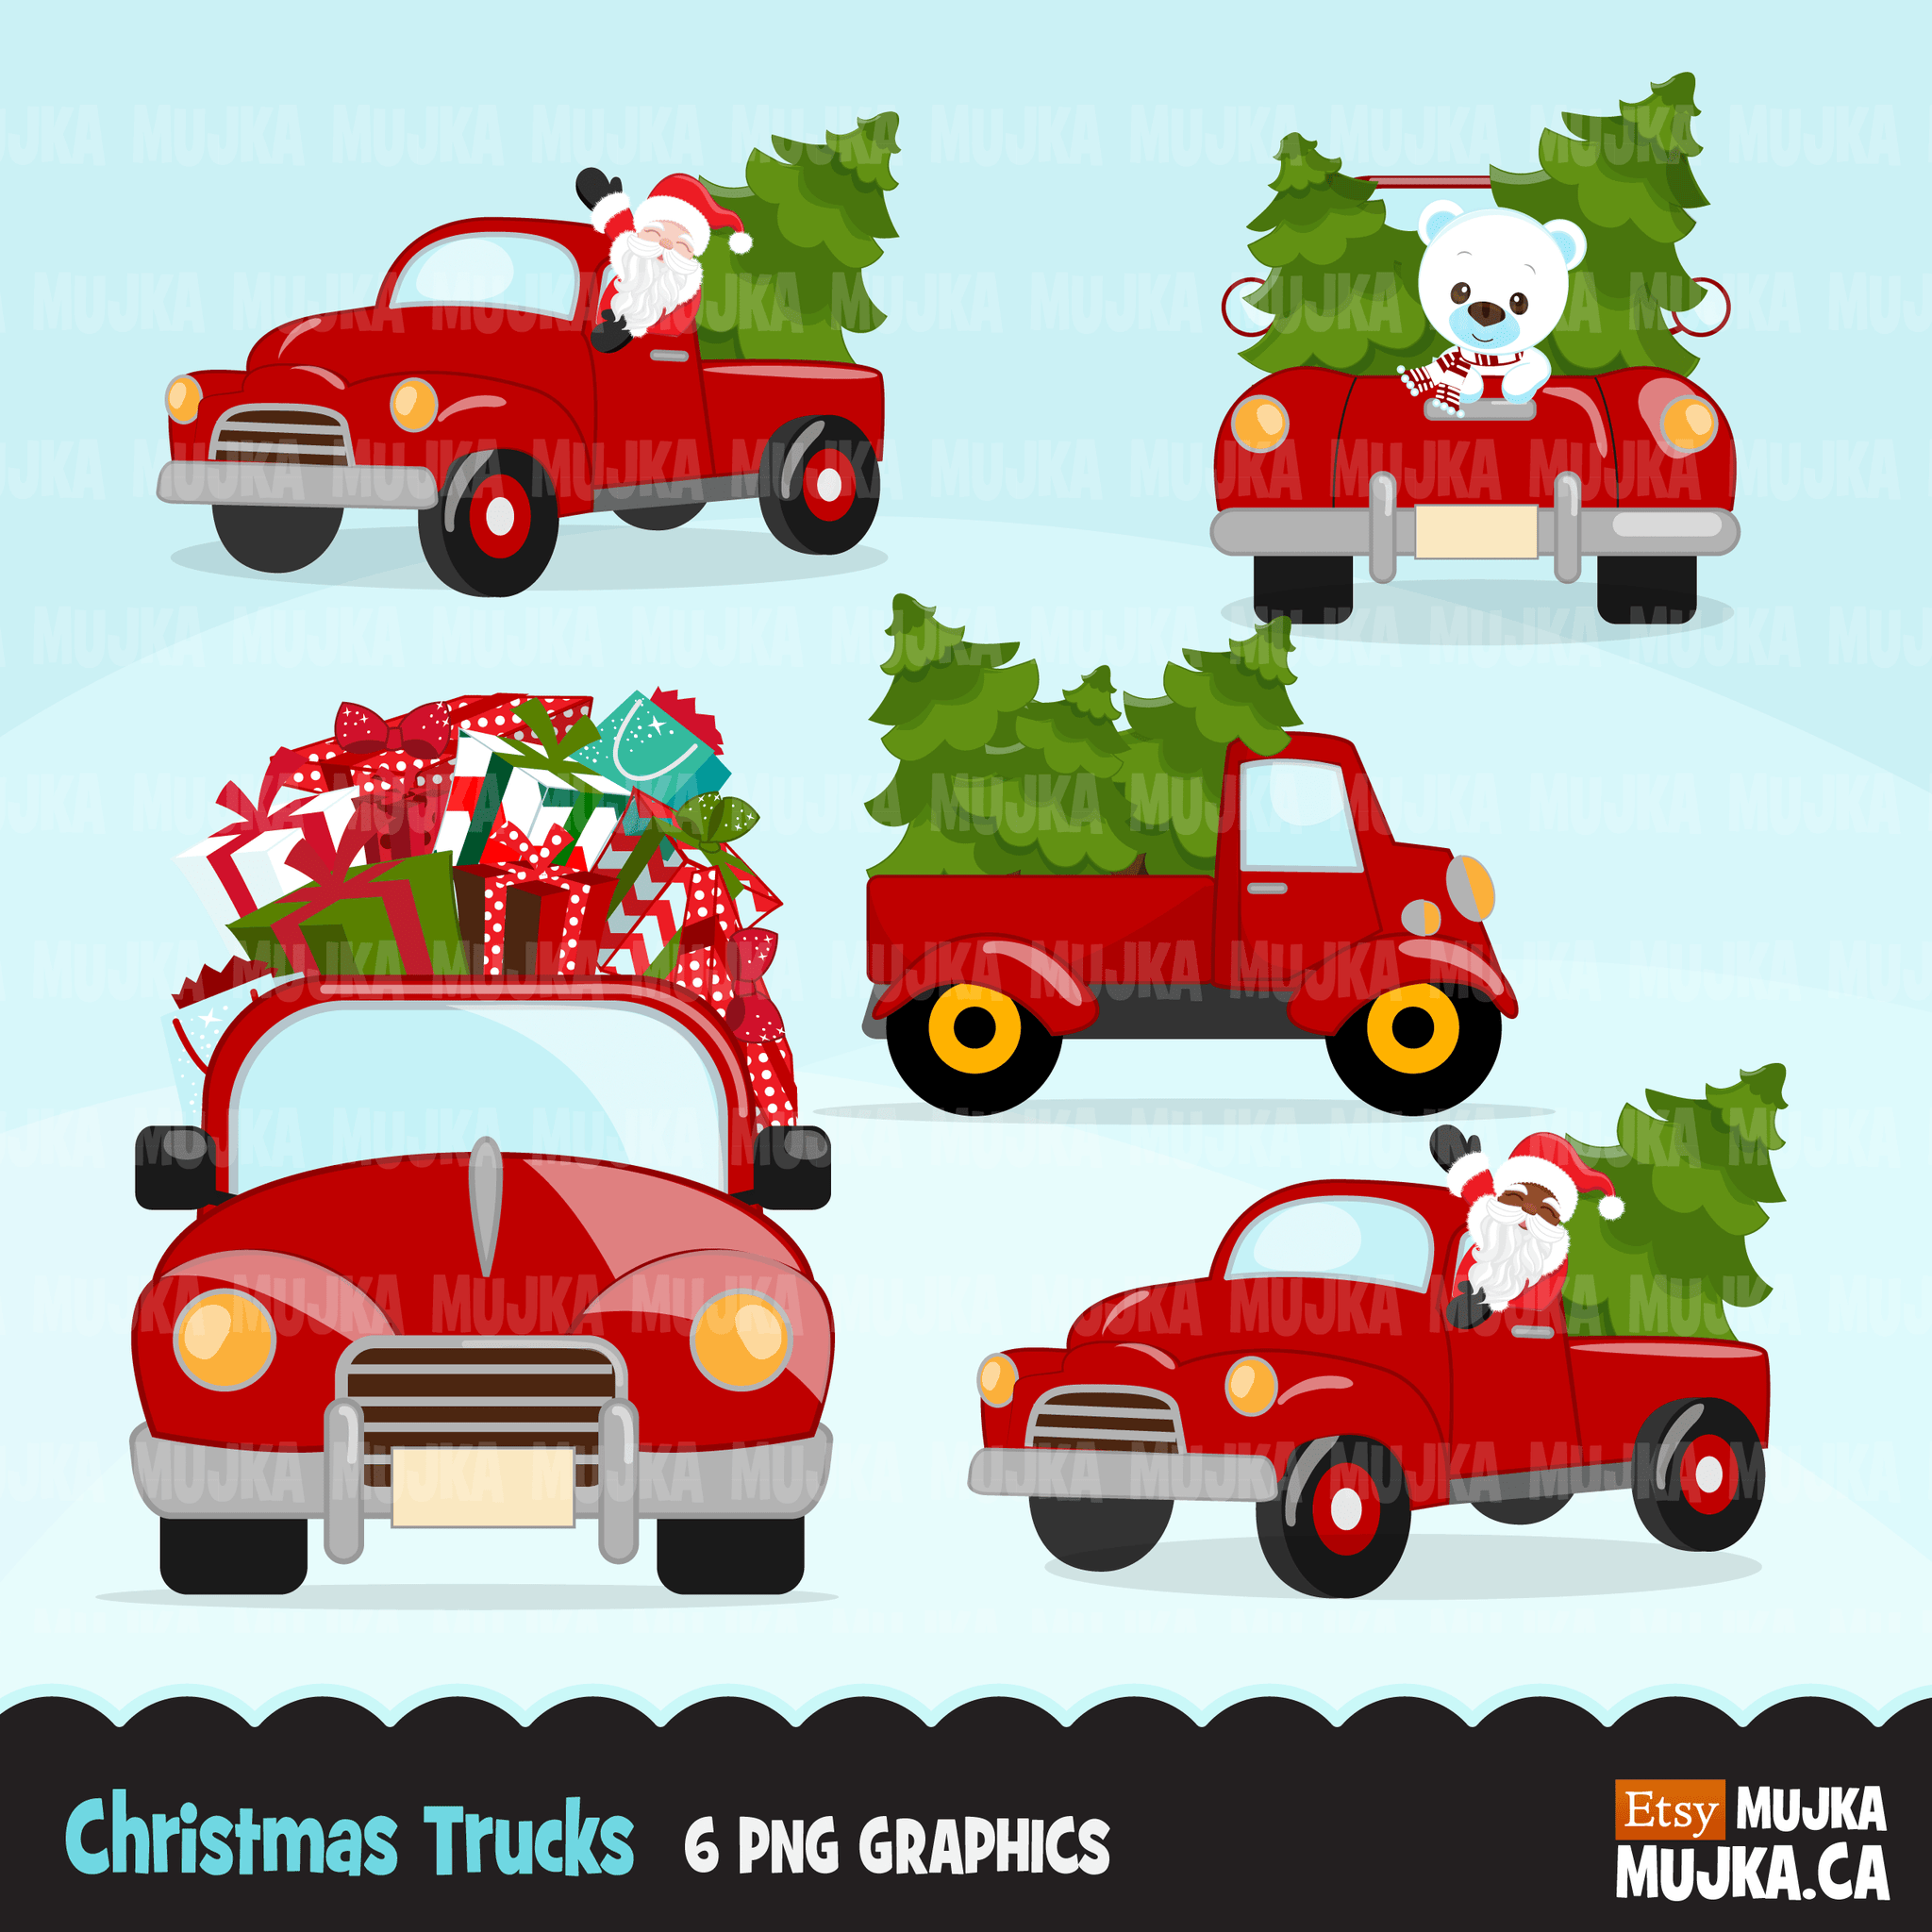 Christmas Trucks clipart, cute red barn trucks filled with Christmas trees, santa driving clip art